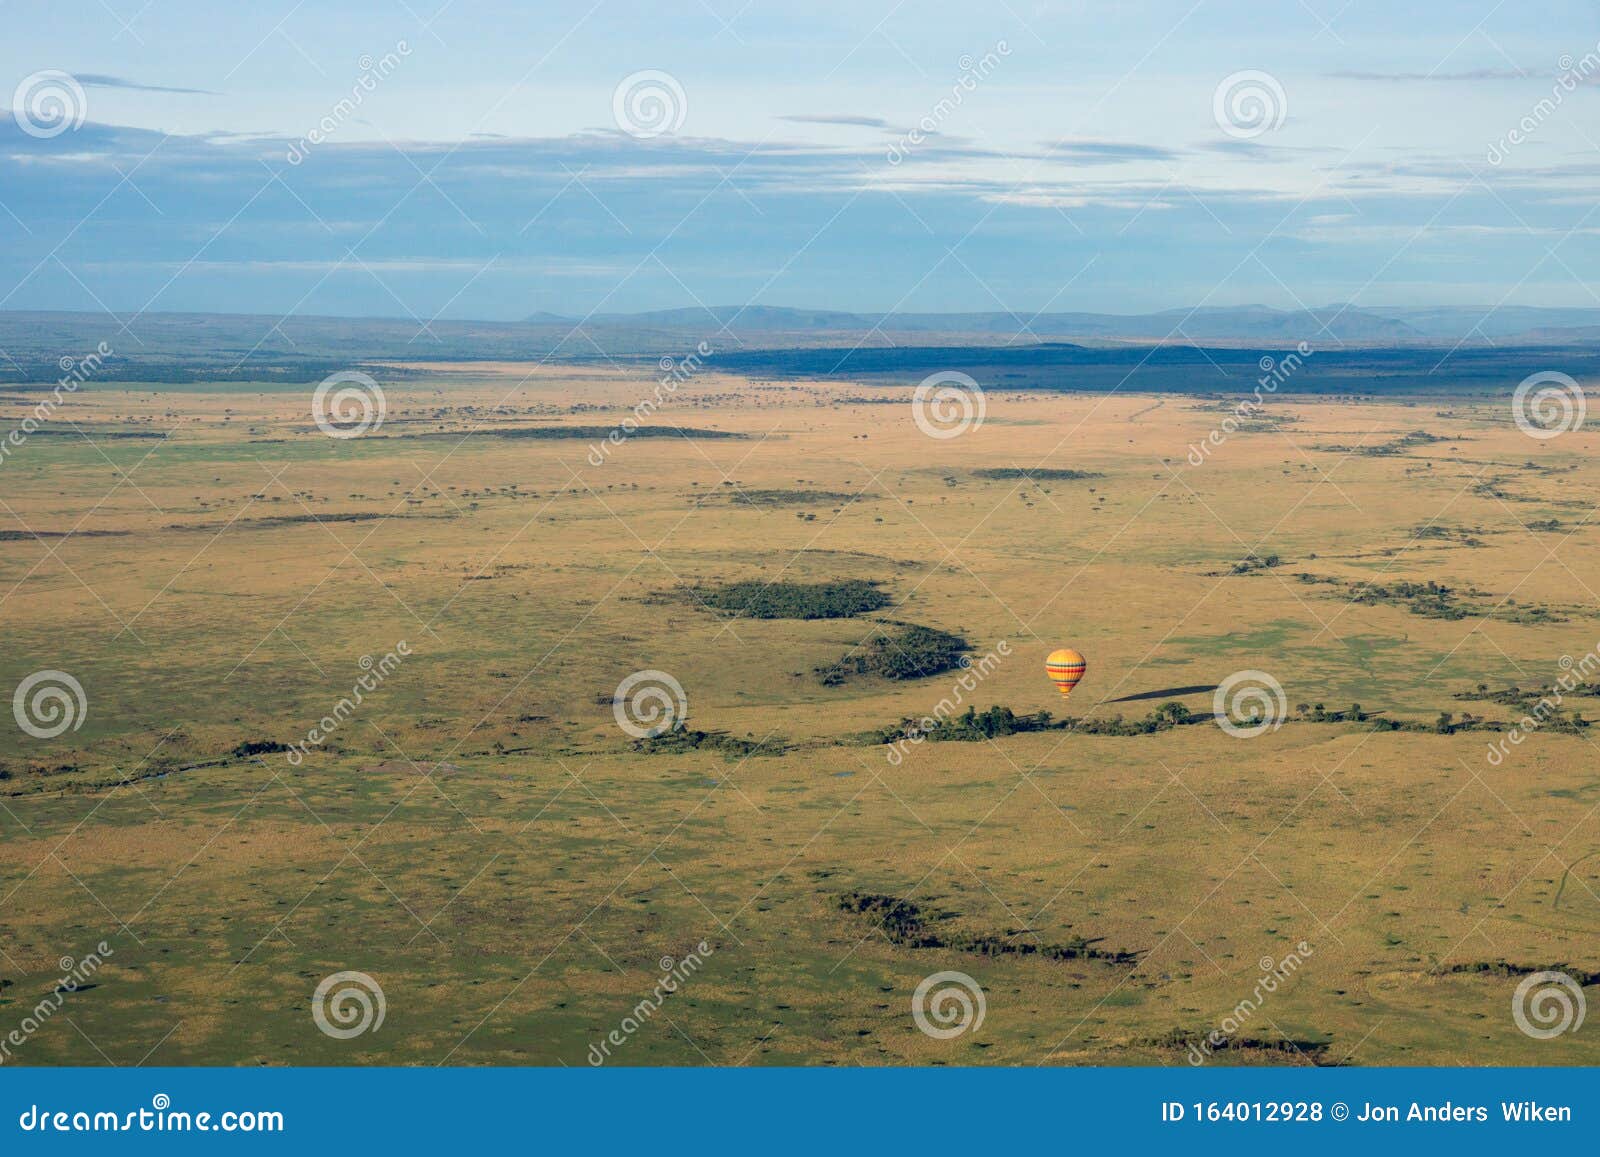 hot air balloon ride on the big green plains of masai mara in kenya/africa.